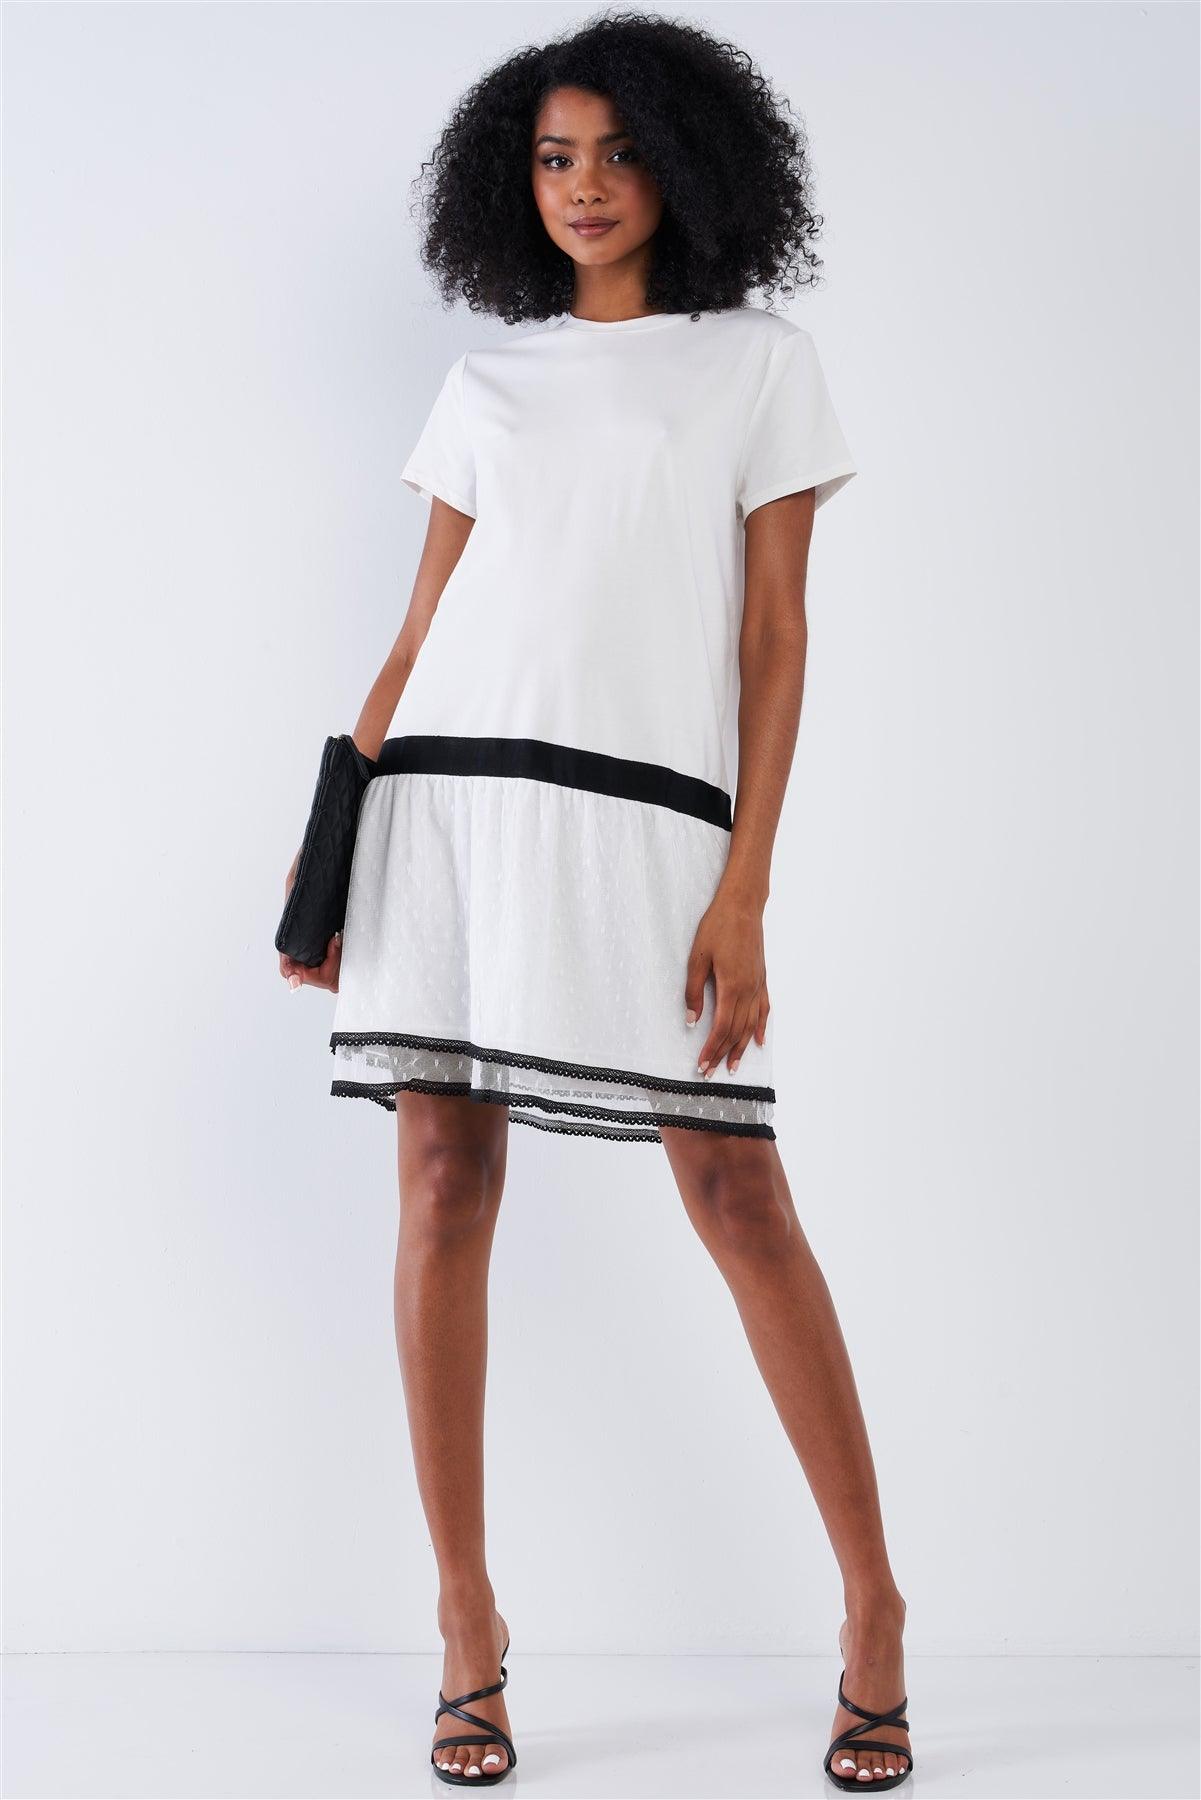 Off-White Black Detail Loose Shapeless Lined Double Mesh Bottom Layer Crew Neck Mini Sleeve T-Shirt Mini Dress